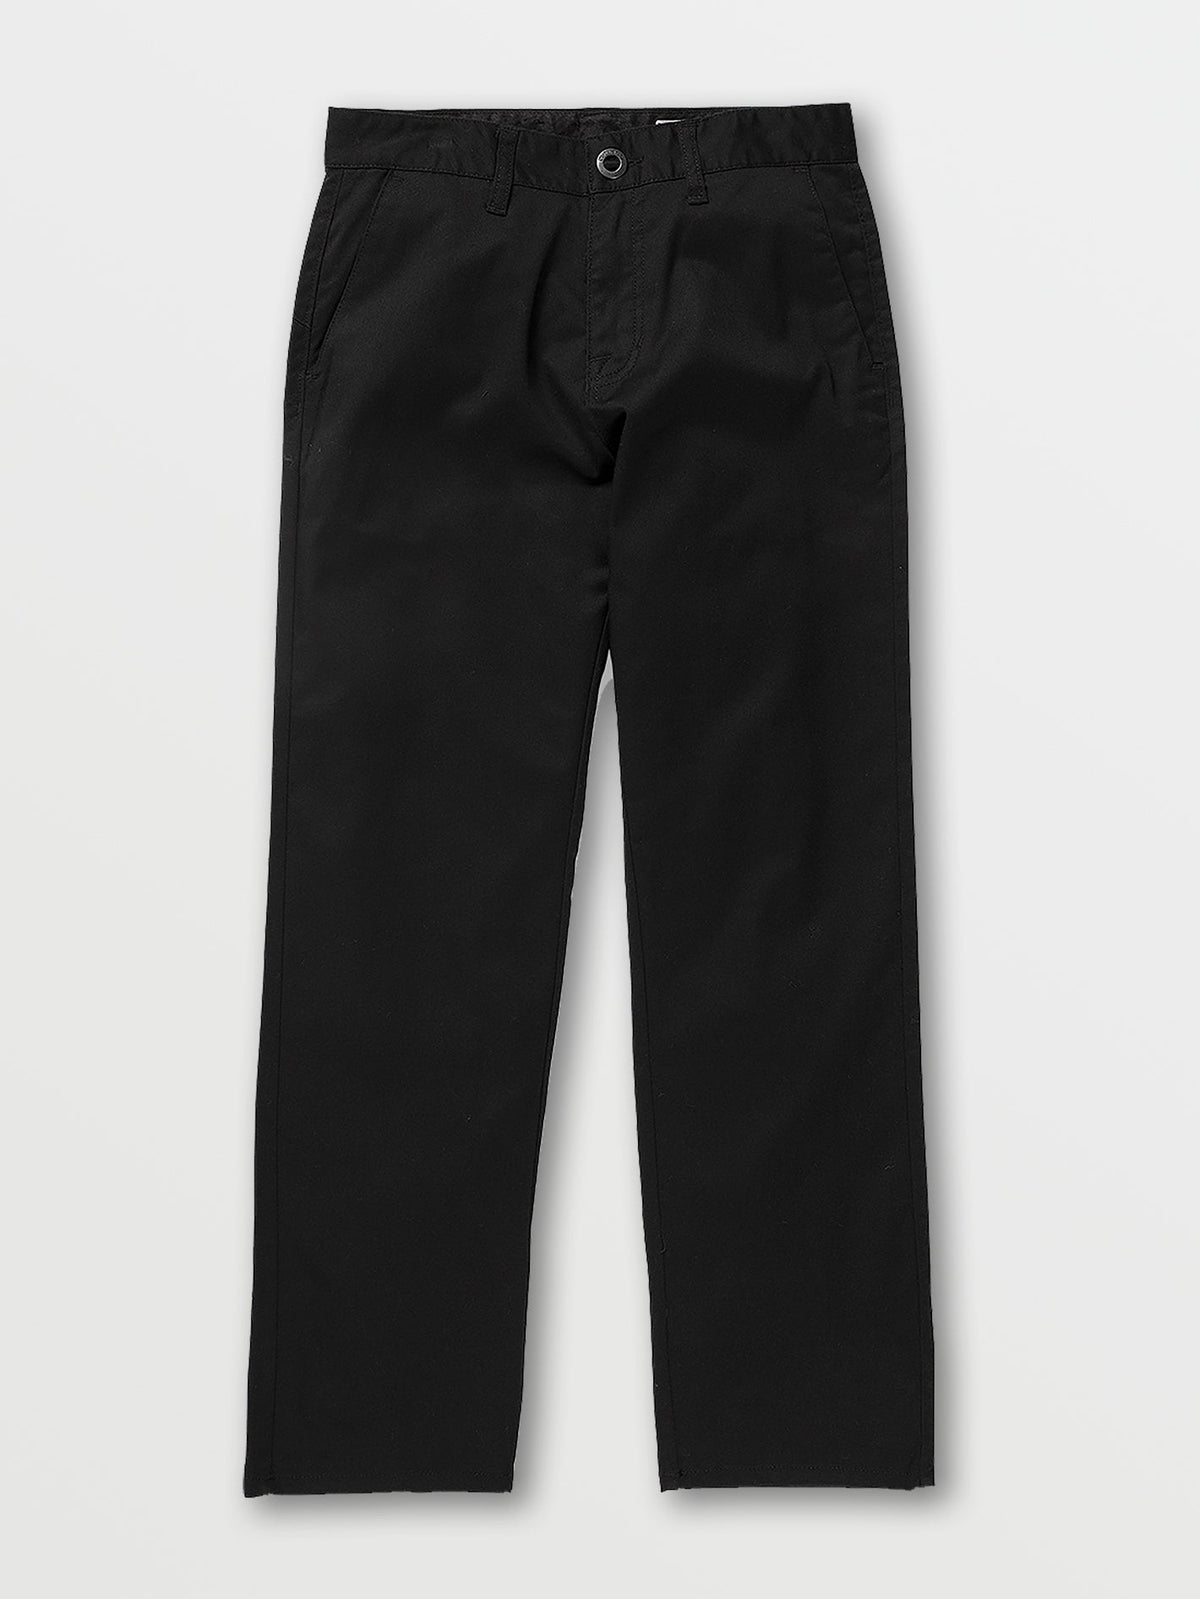 Volcom Frickin Regular Stretch Boys Pants (Age 8-14) Black